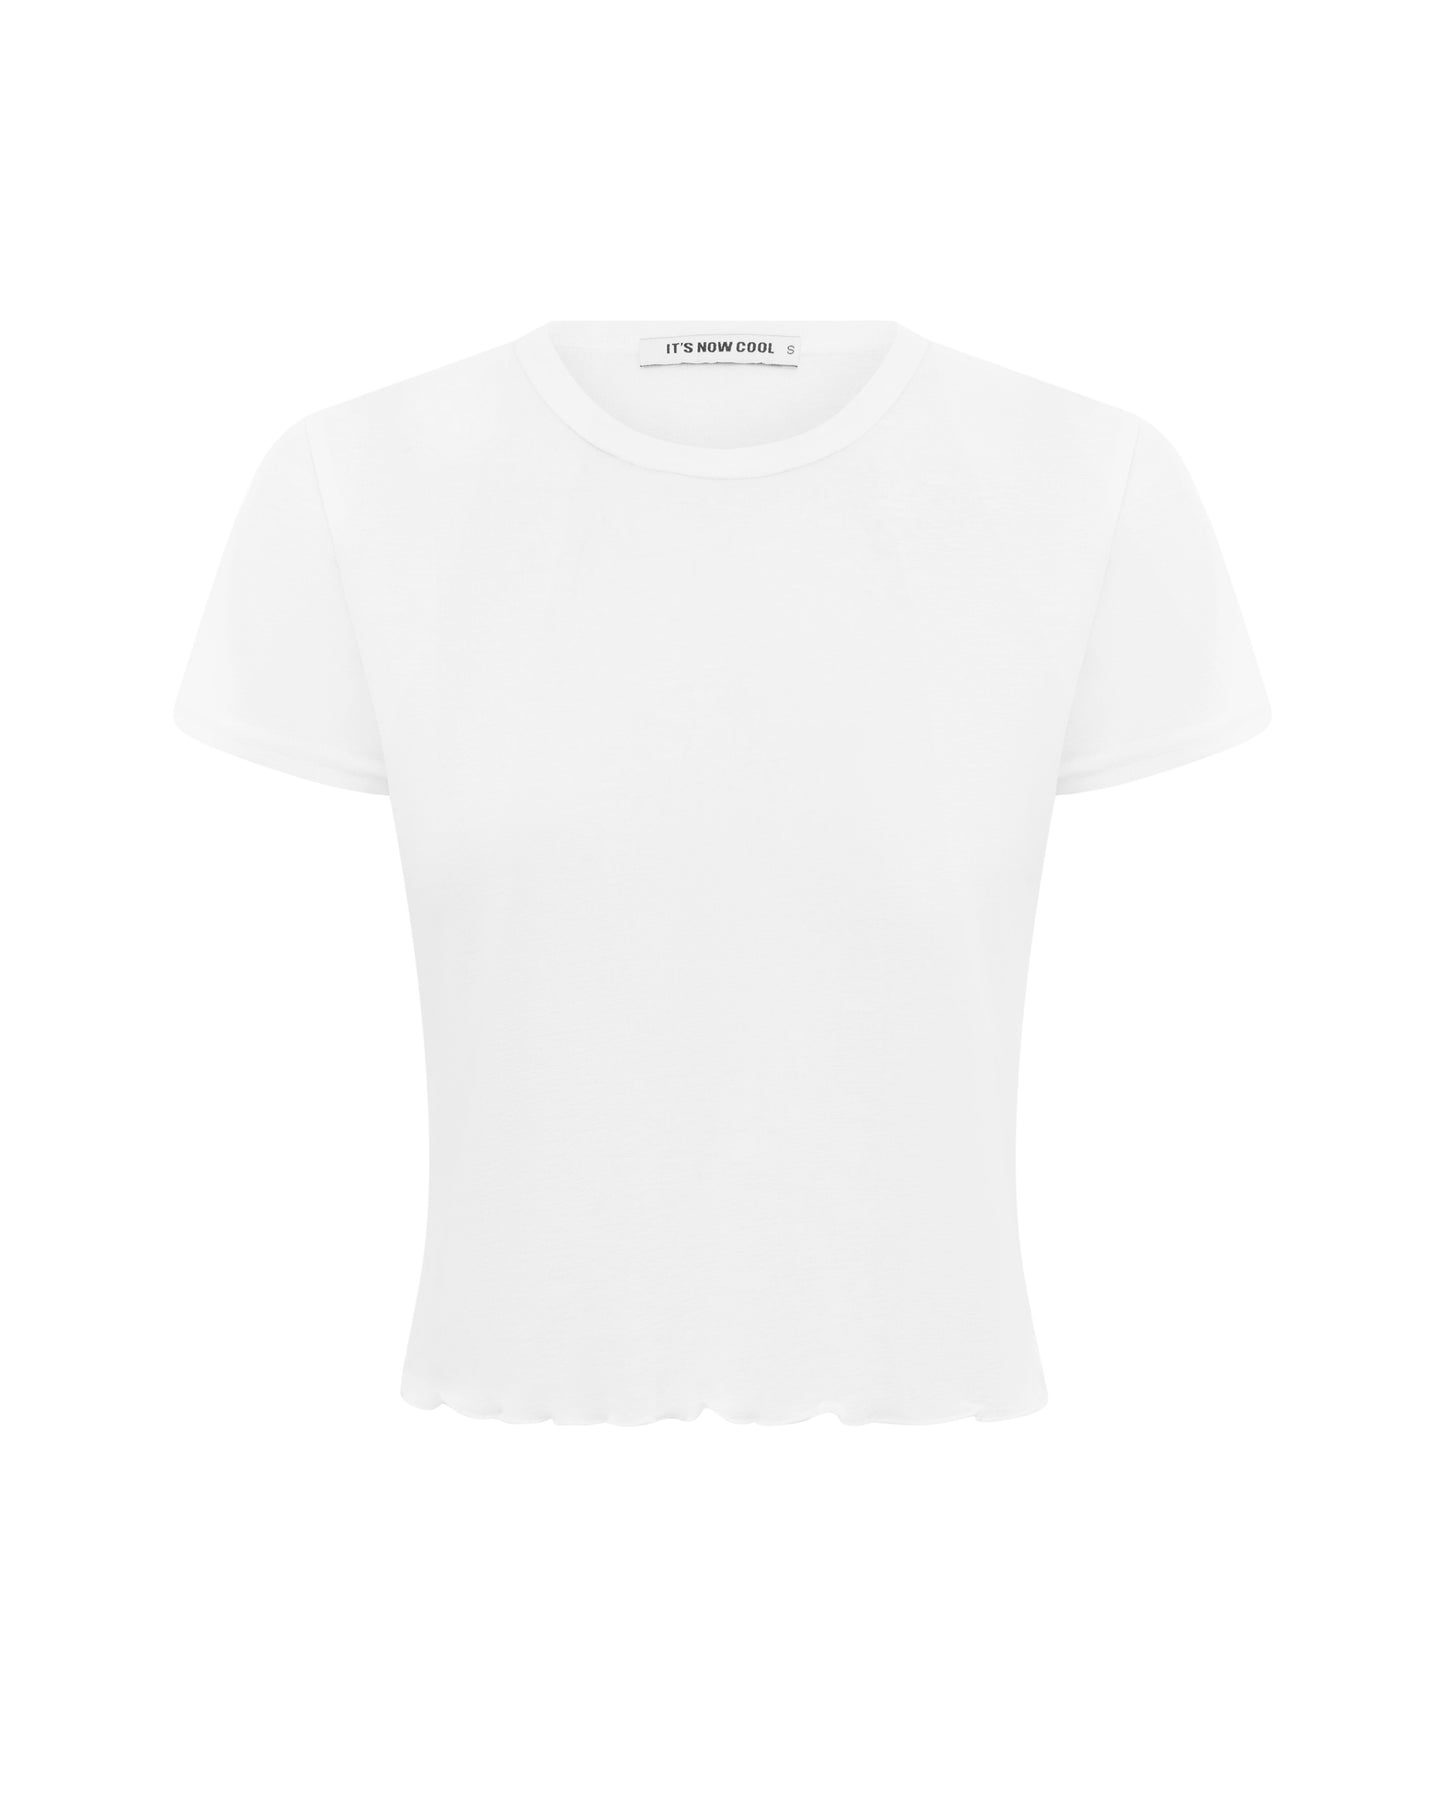 It's Now Cool Beachwear - T-shirt de malha - Branco